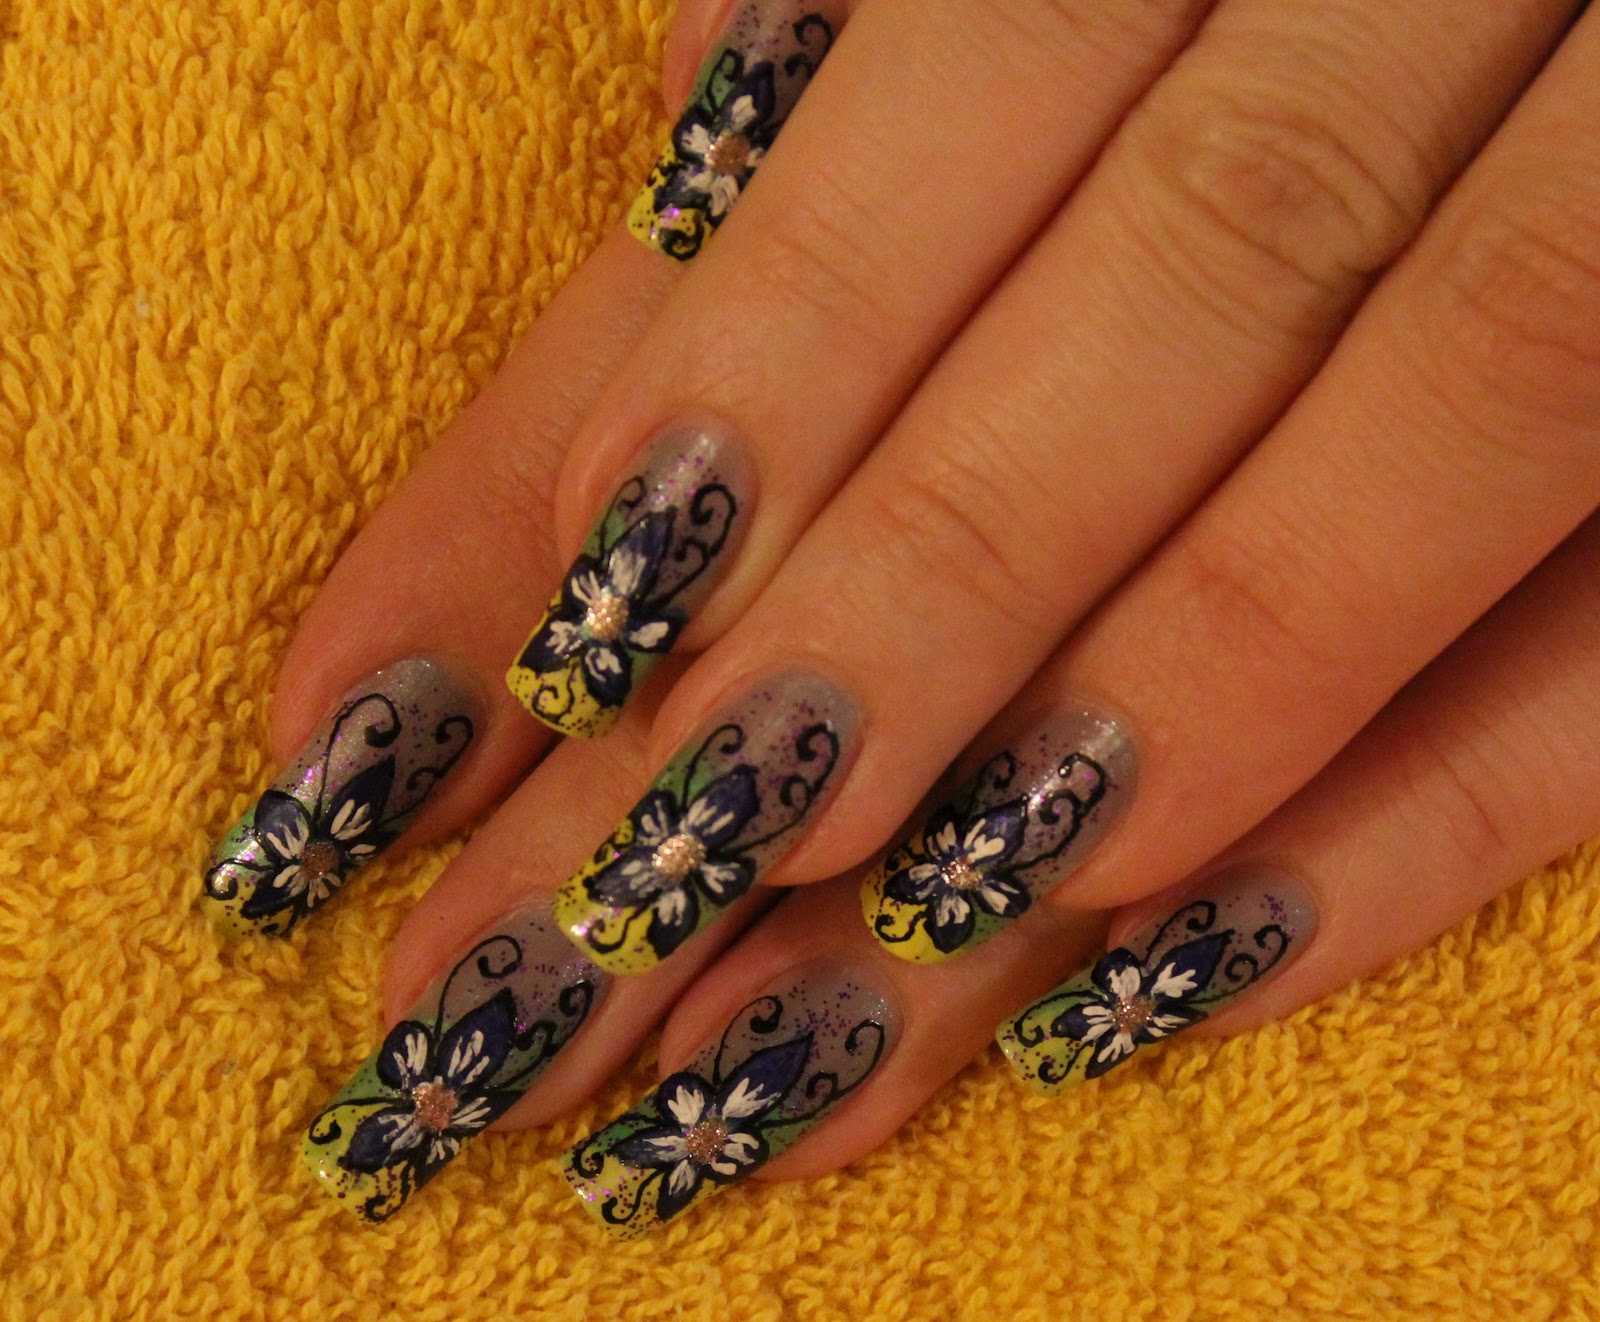 1. Blue Flower Nail Design - wide 1